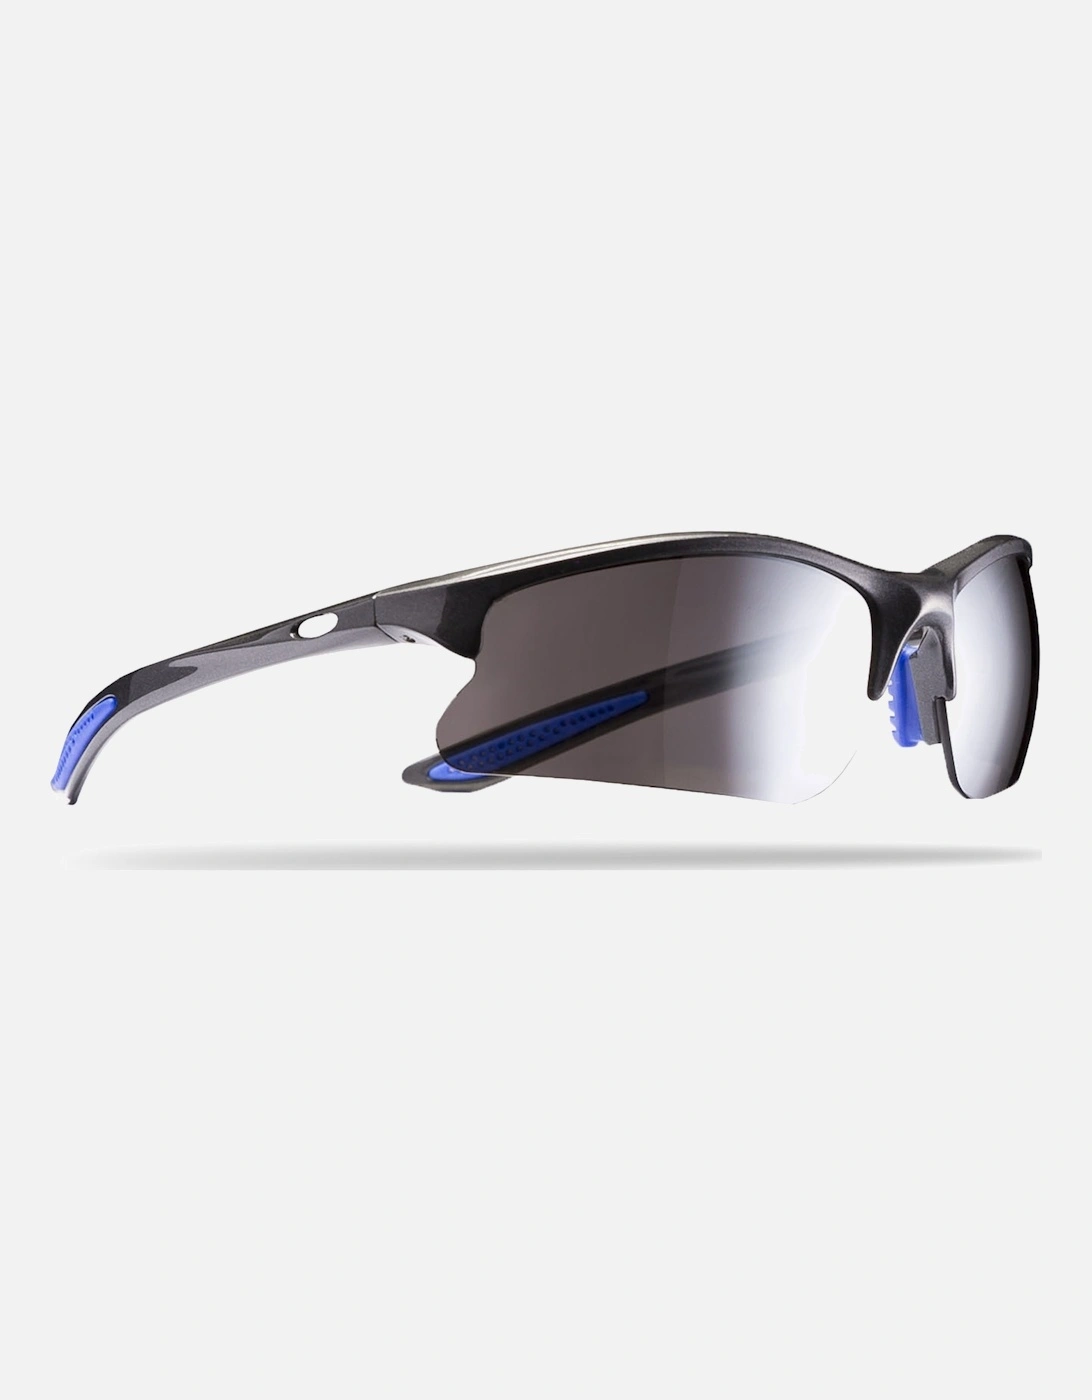 Unisex Adults Mantivu Tinted Lens Sunglasses